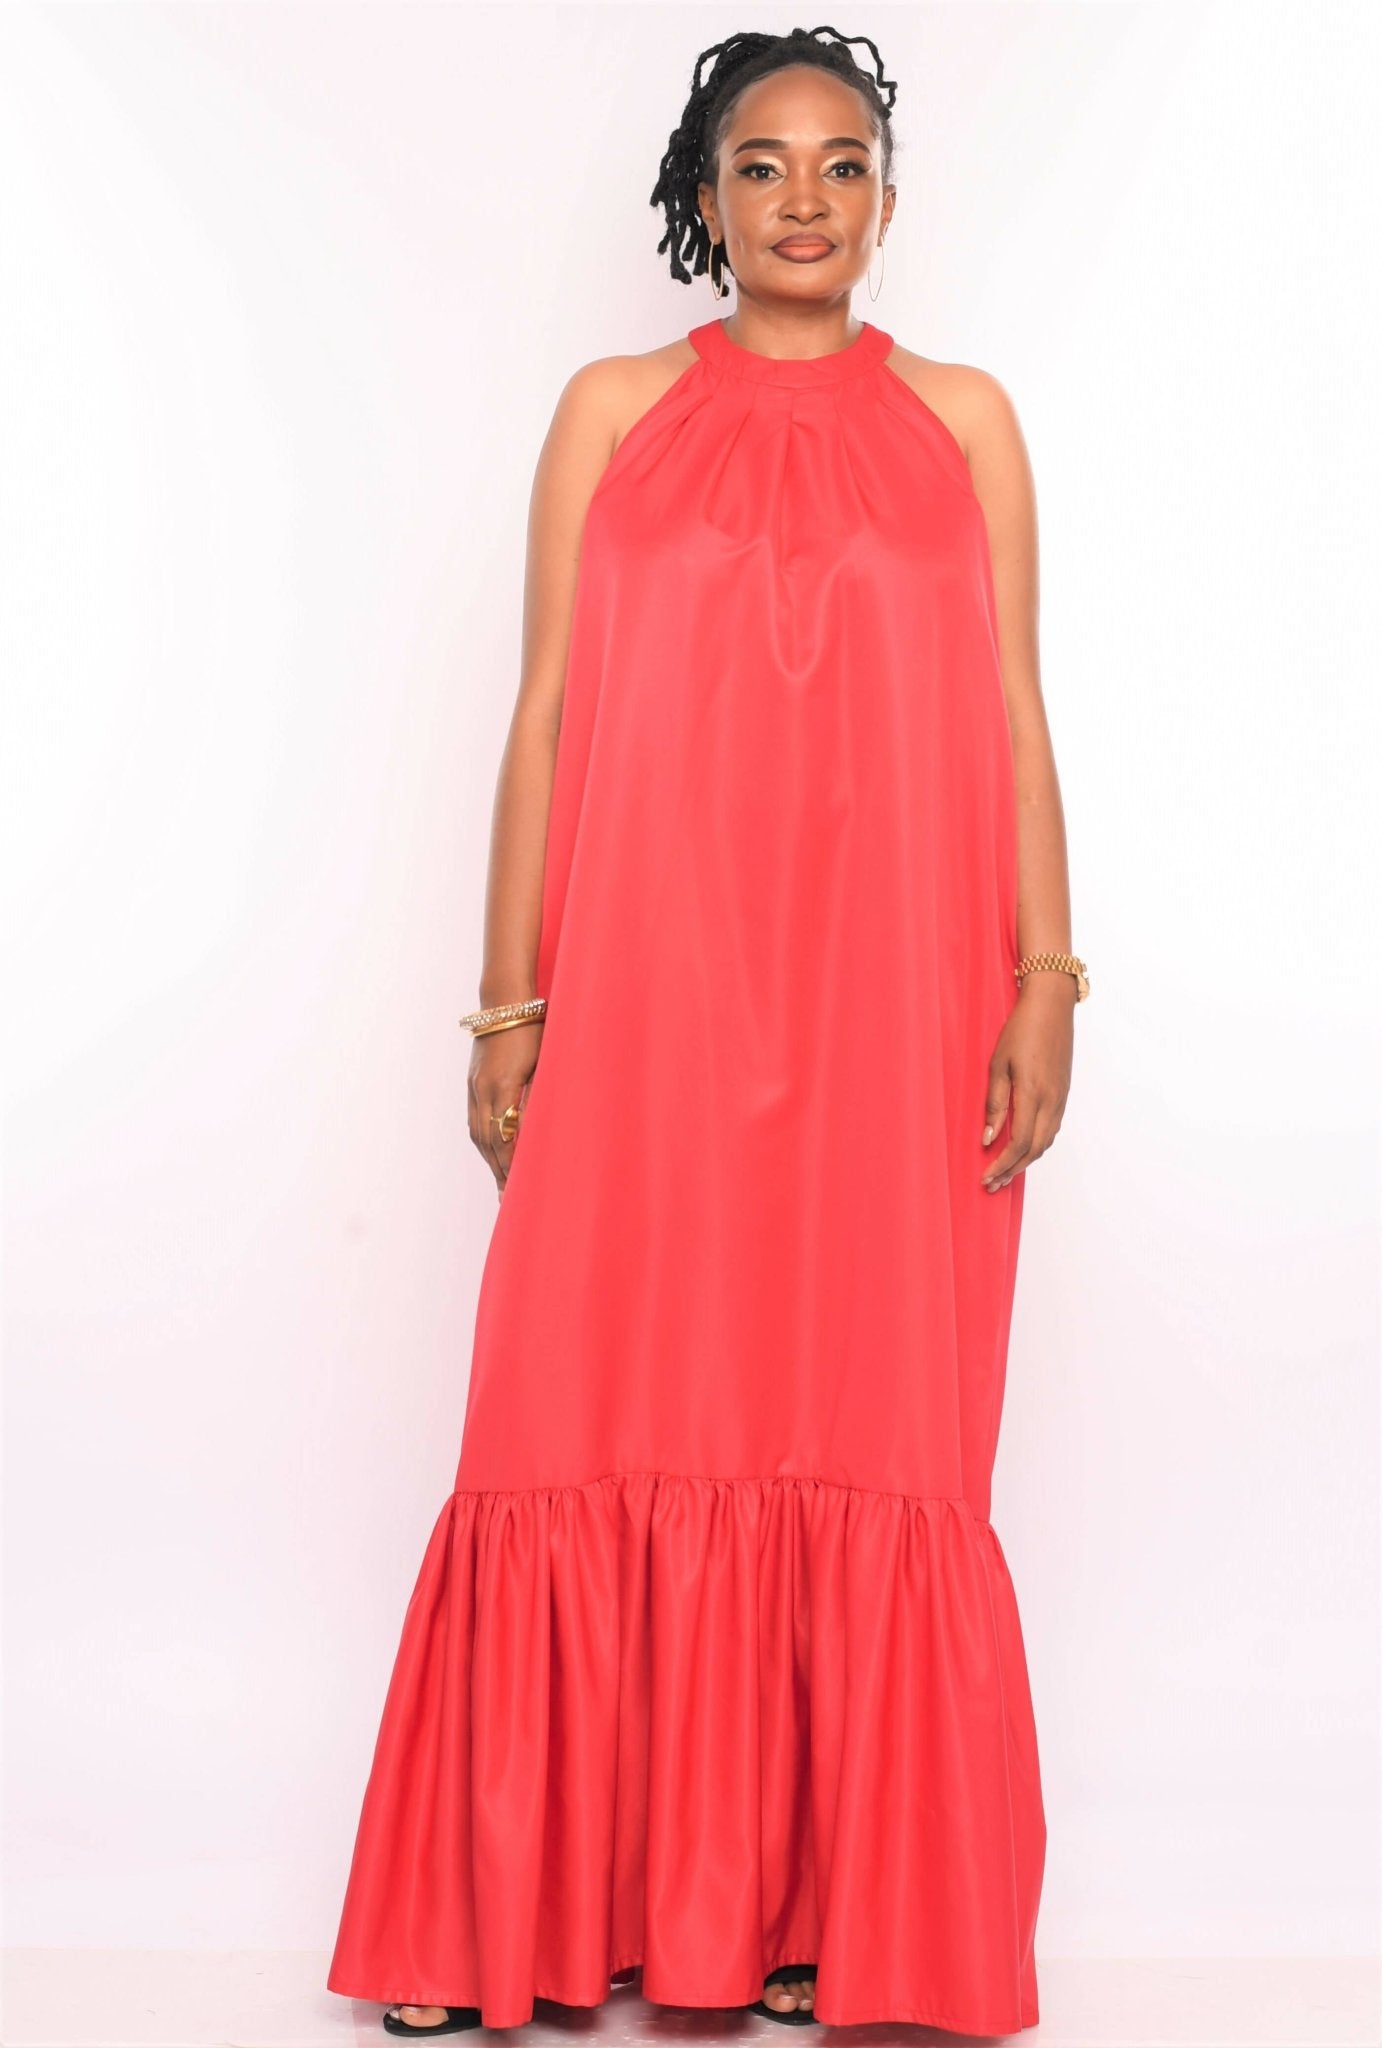 Magali Designs Halter Dress - Red - Shopzetu